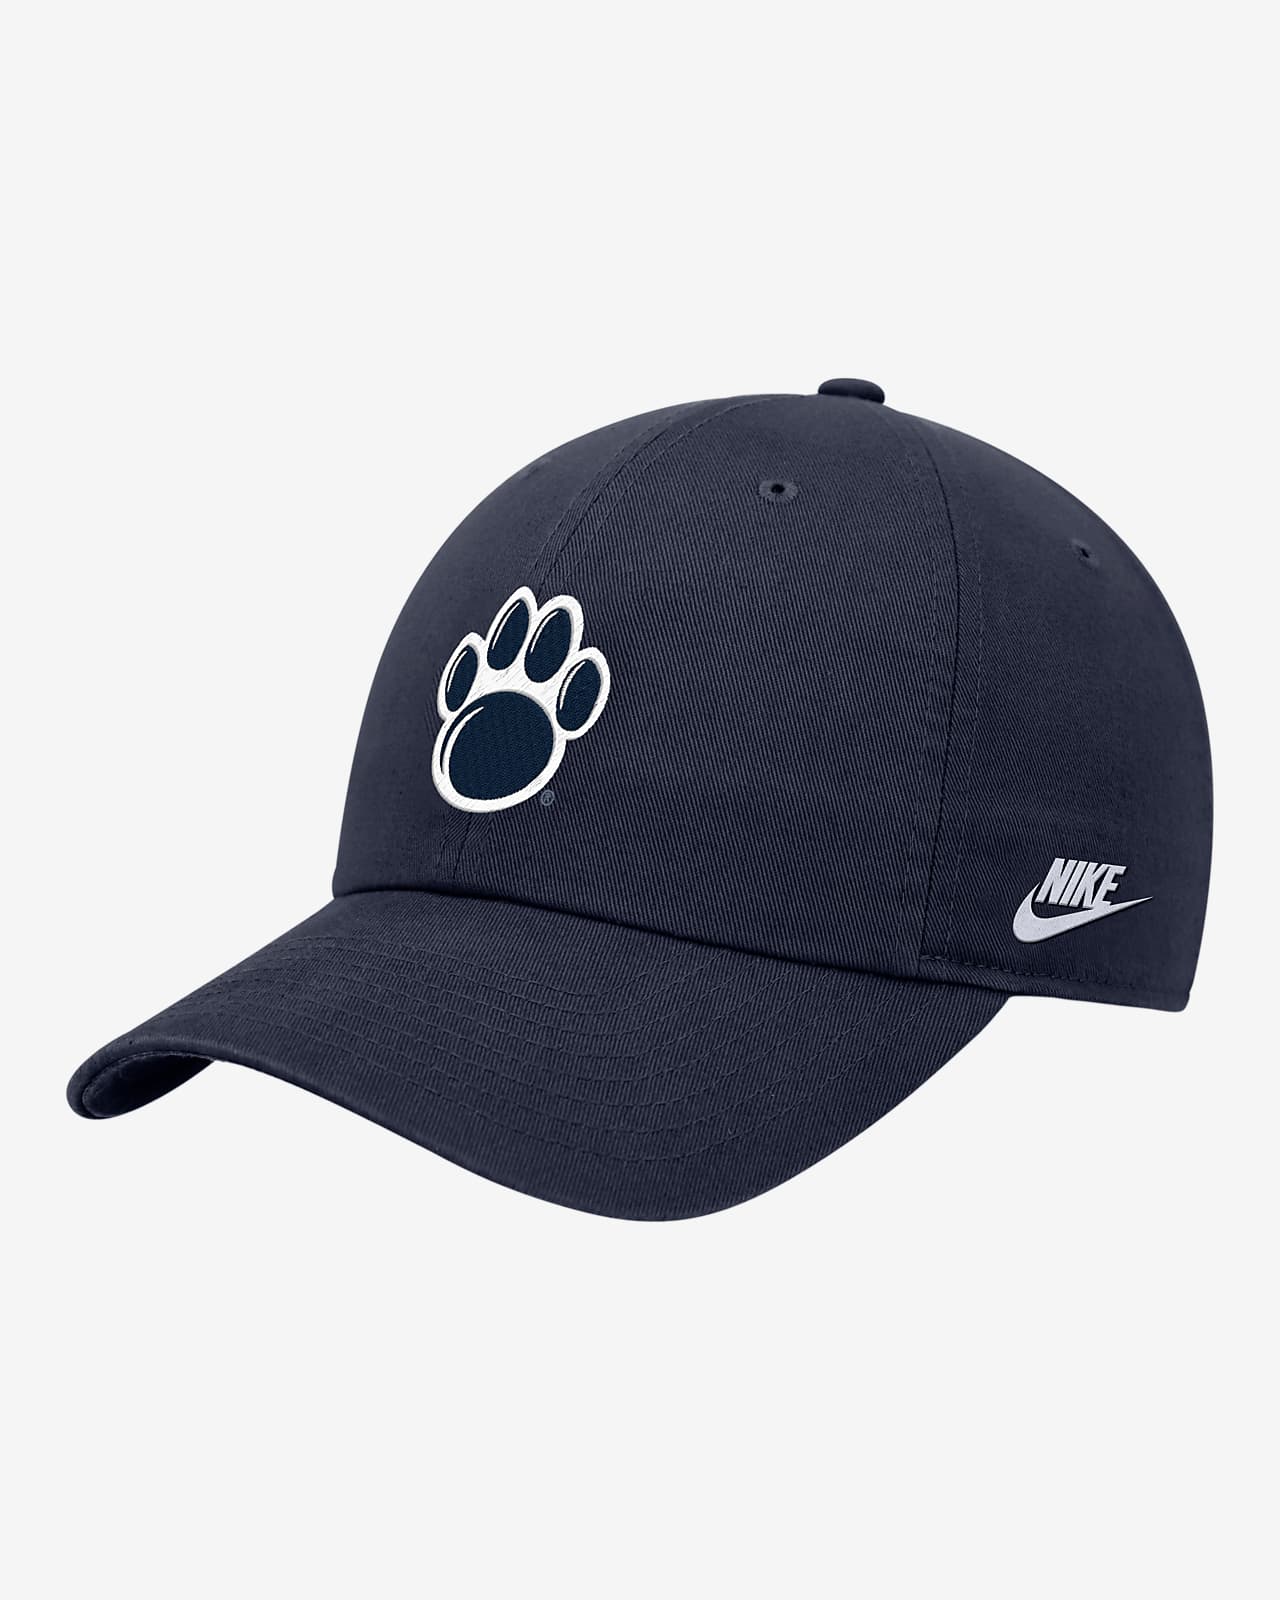 Penn State Nike College Cap